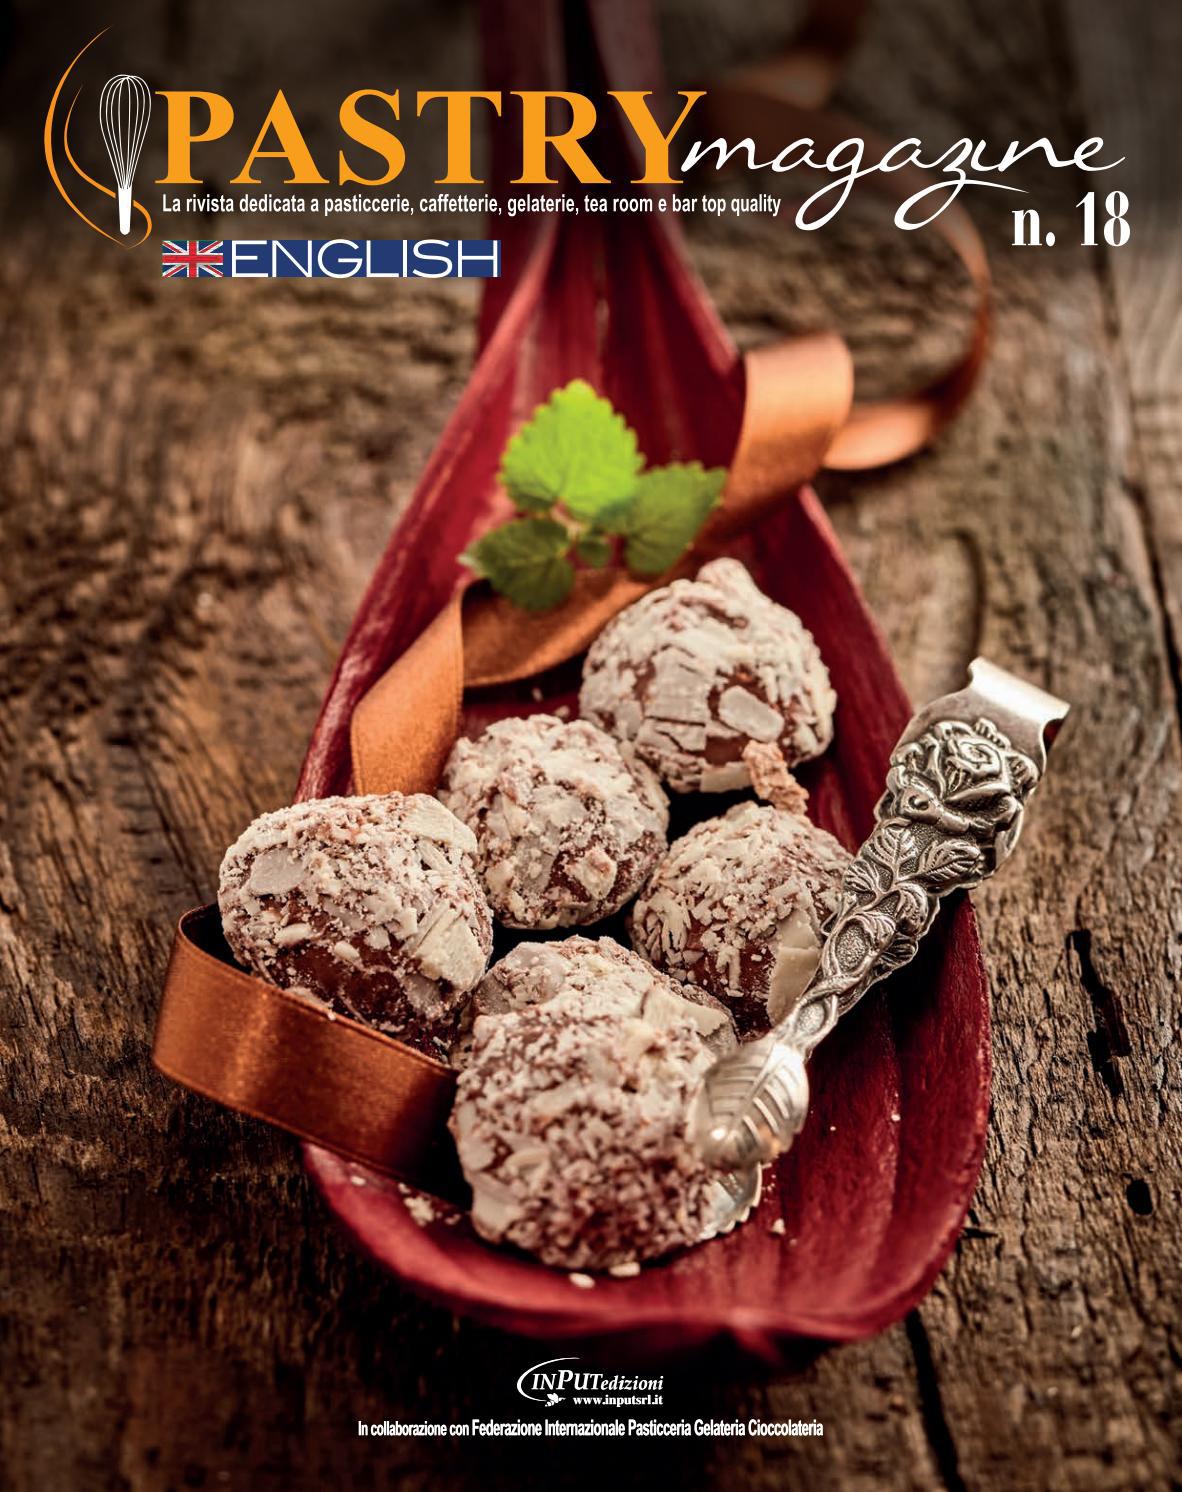 Pastry magazine  №18 English